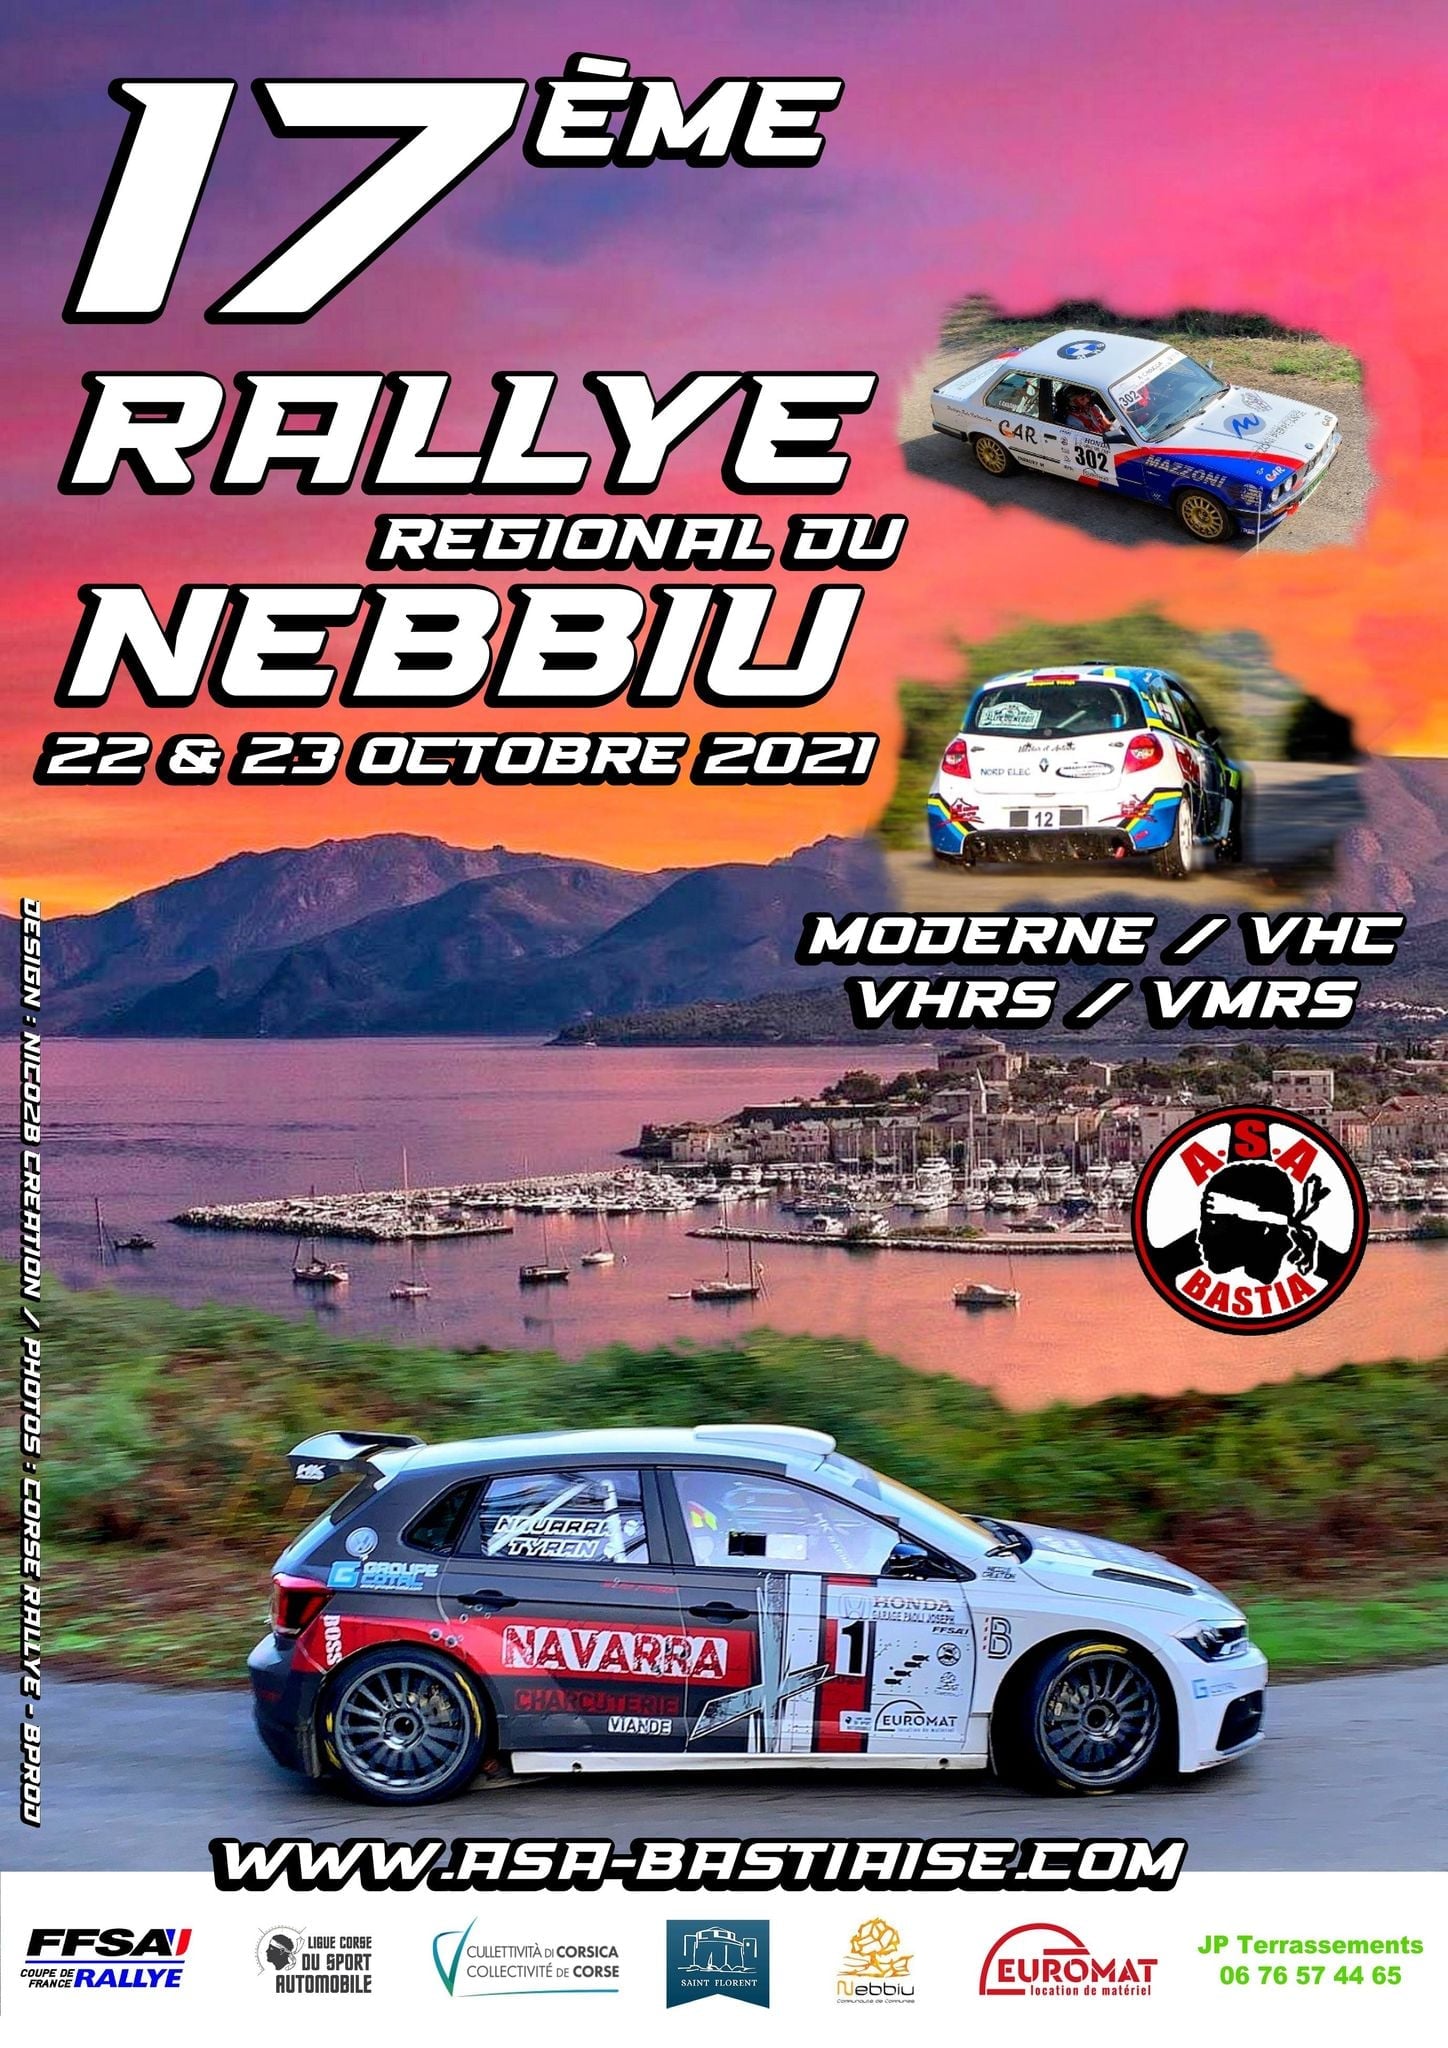 You are currently viewing 17 ème Rallye Régional du Nebbiu : Présentation !